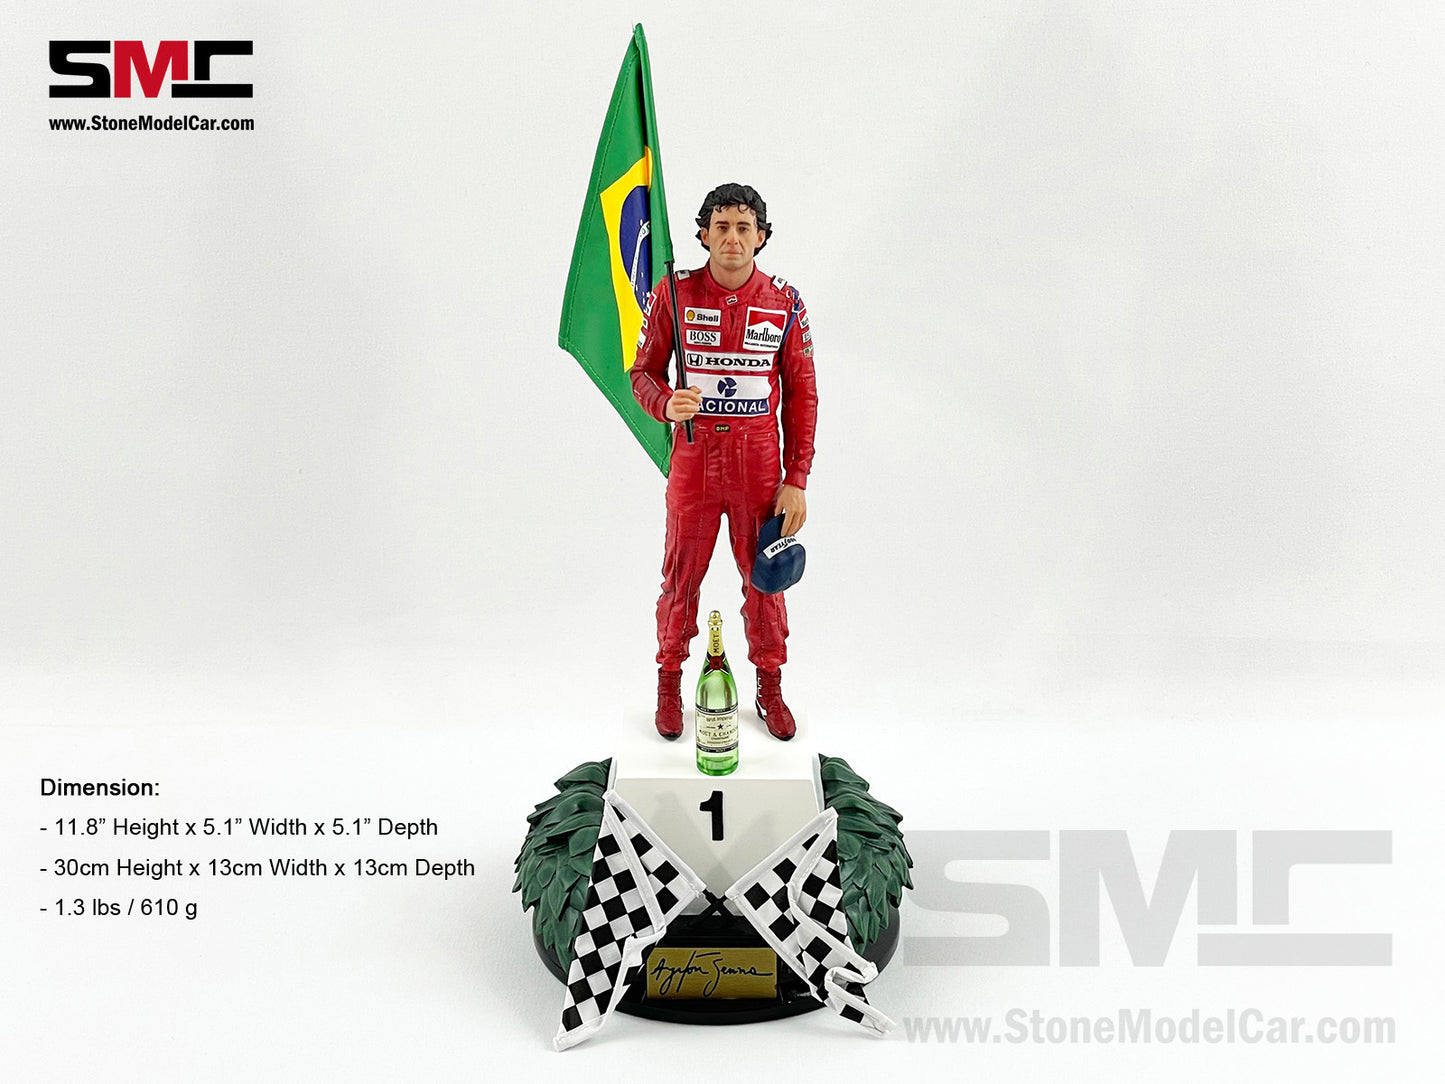 Mclaren F1 MP4/6 #1 Ayrton Senna Brazil GP 1991 World Champion Iron Studios 1:10 Figure with Marlboro Decal